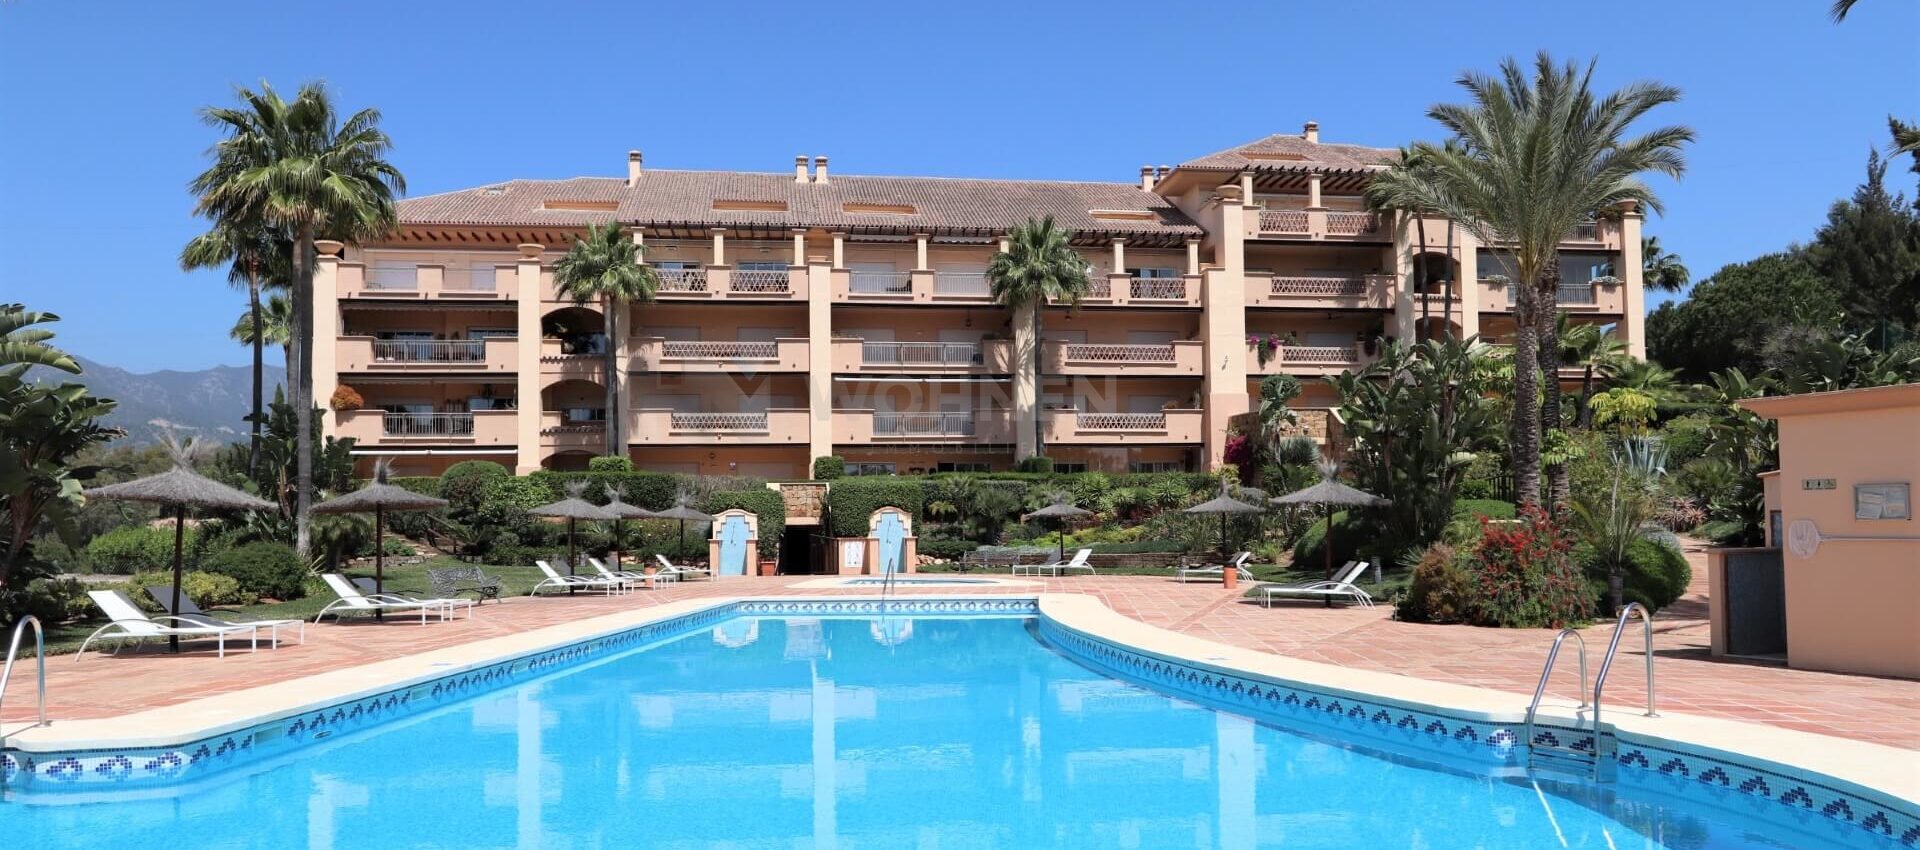 Charmantes Apartment mit herrlichem Meerblick in Los Monteros Rio Real